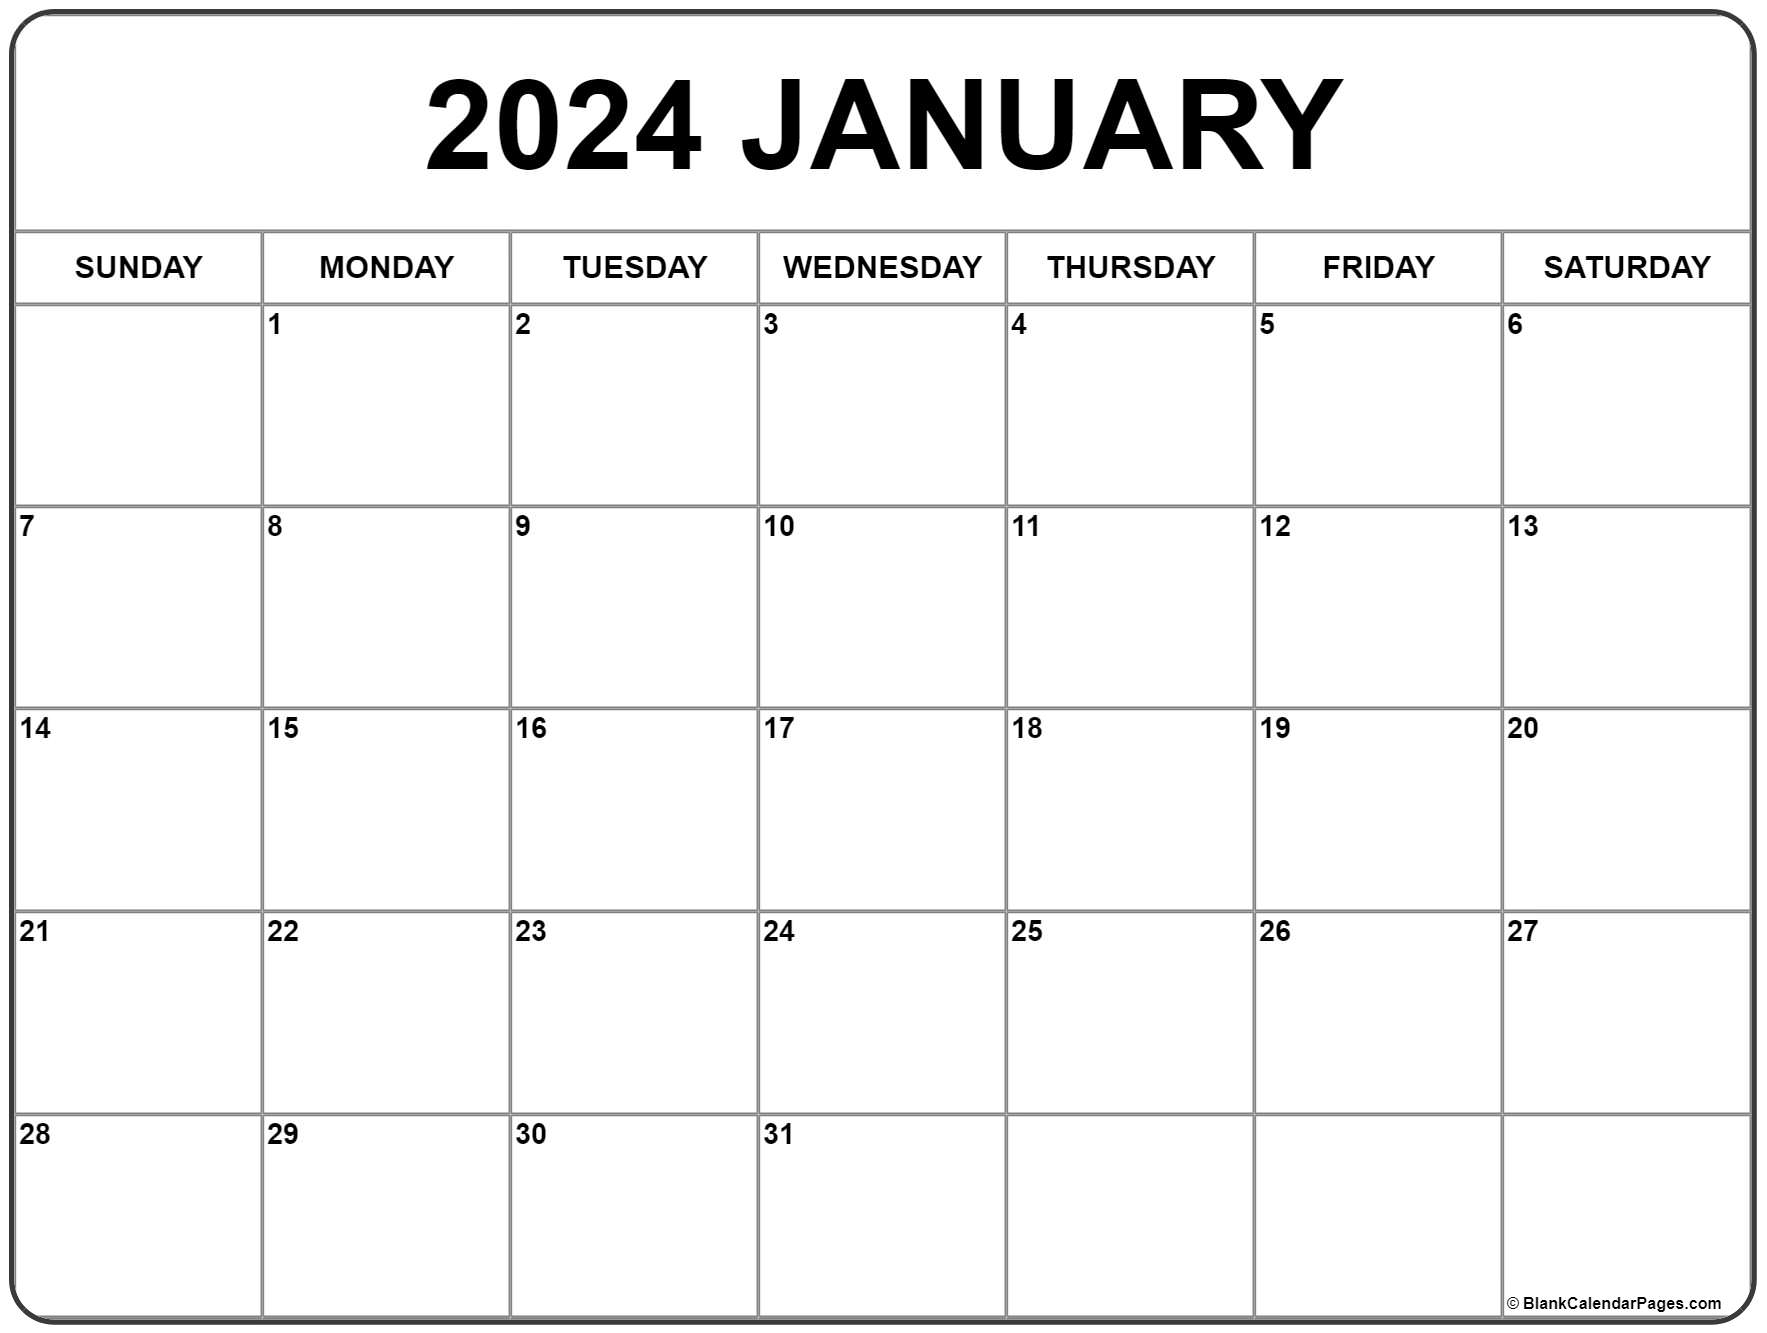 Blank 2021 Calendar January 2021 calendar | free printable monthly calendars